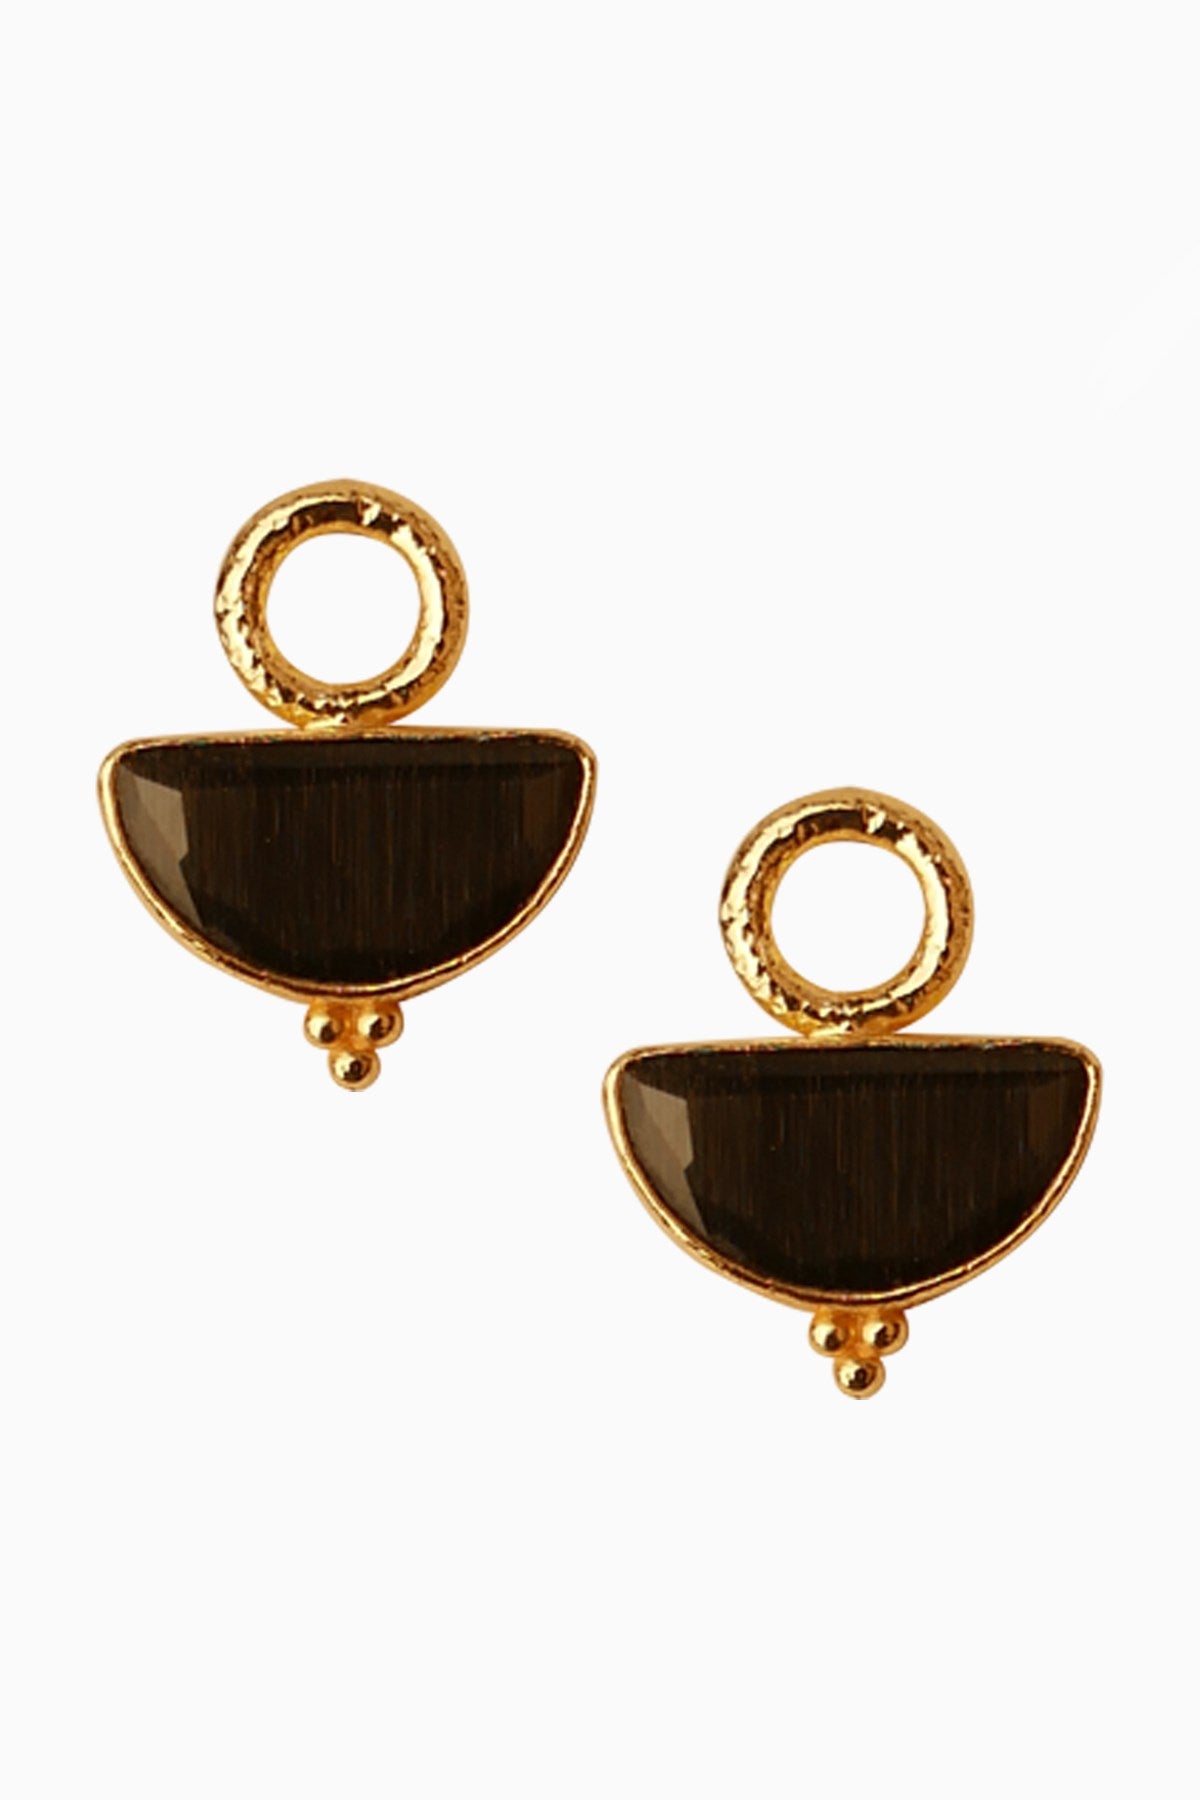 Black Cat's Eye Stone Geometric Earrings Gold Plated